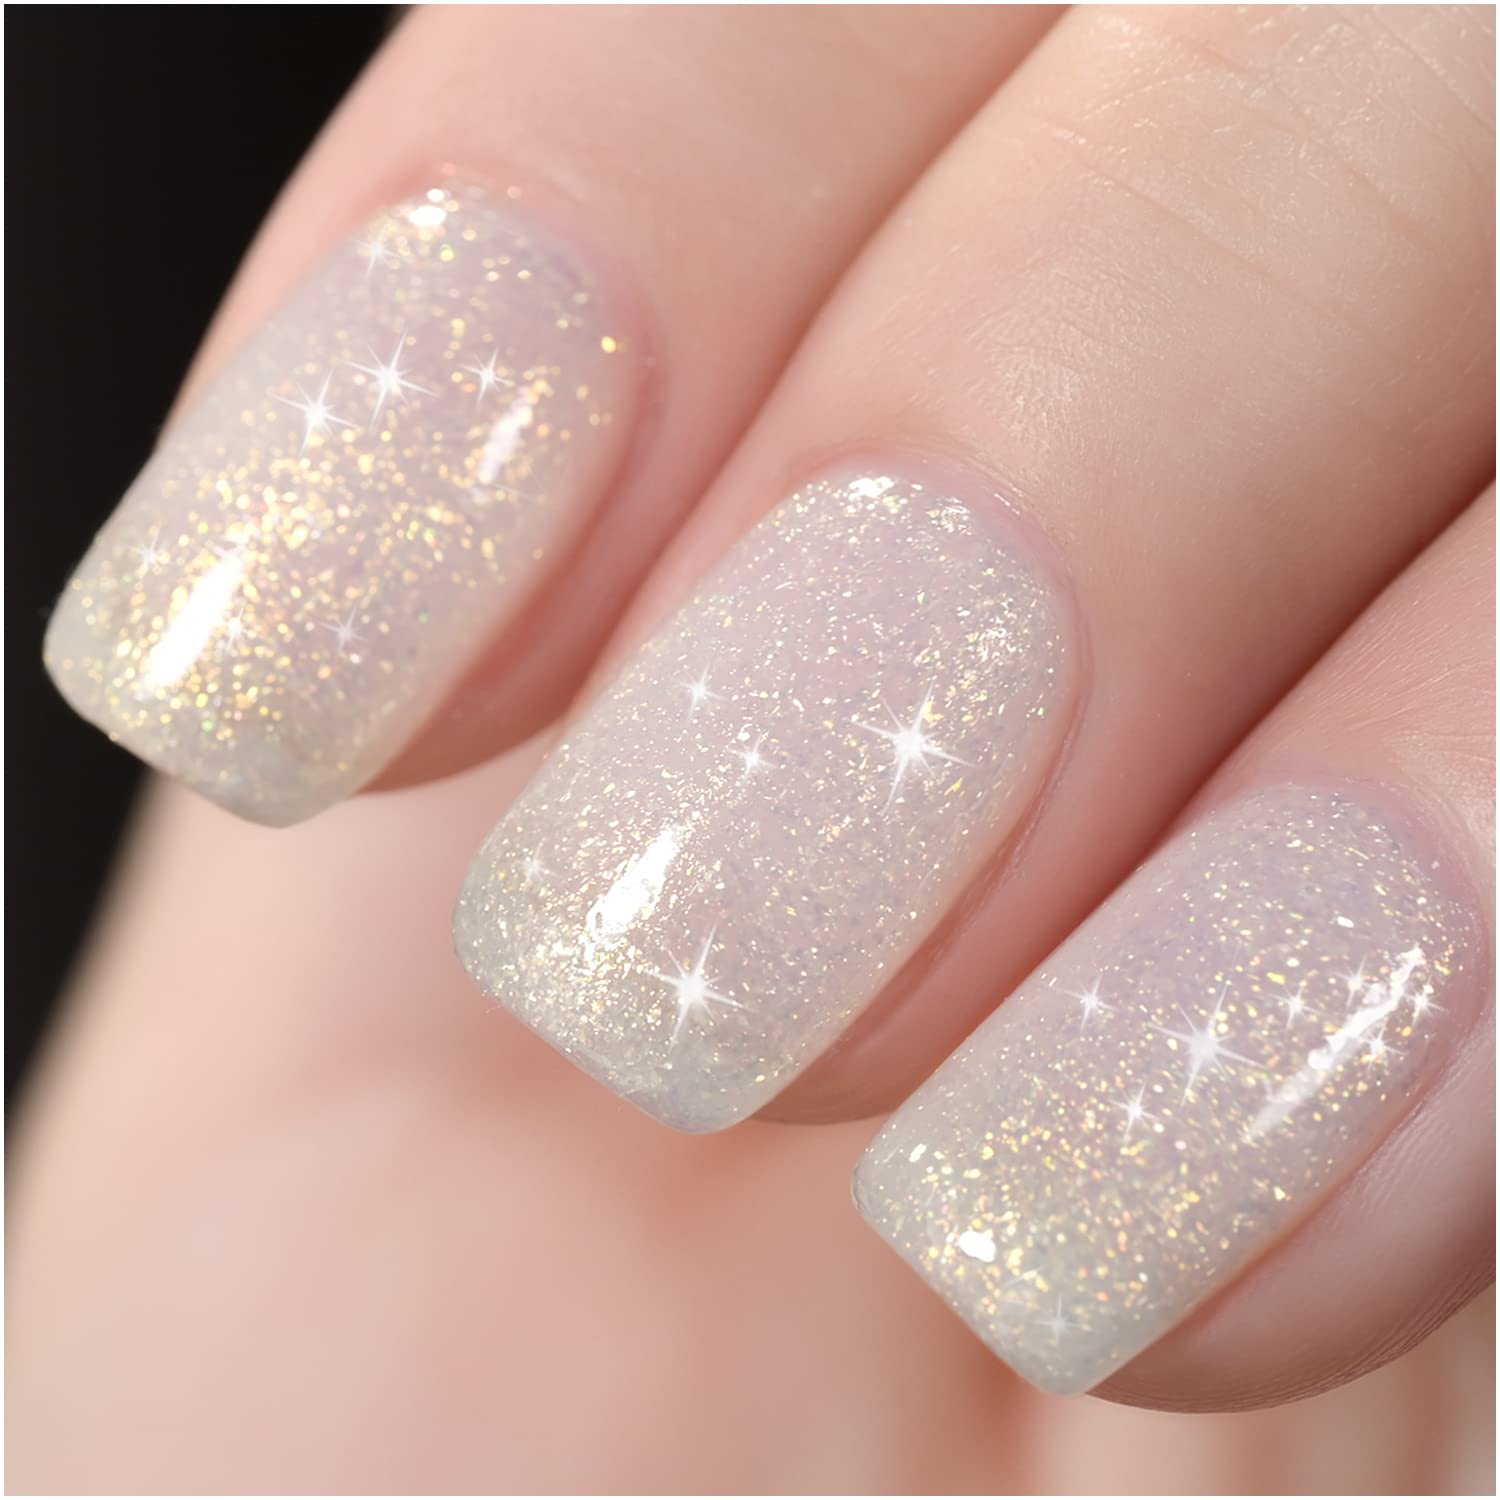 45 Pretty & Romantic Nail Design Ideas To Try : Glitter nails